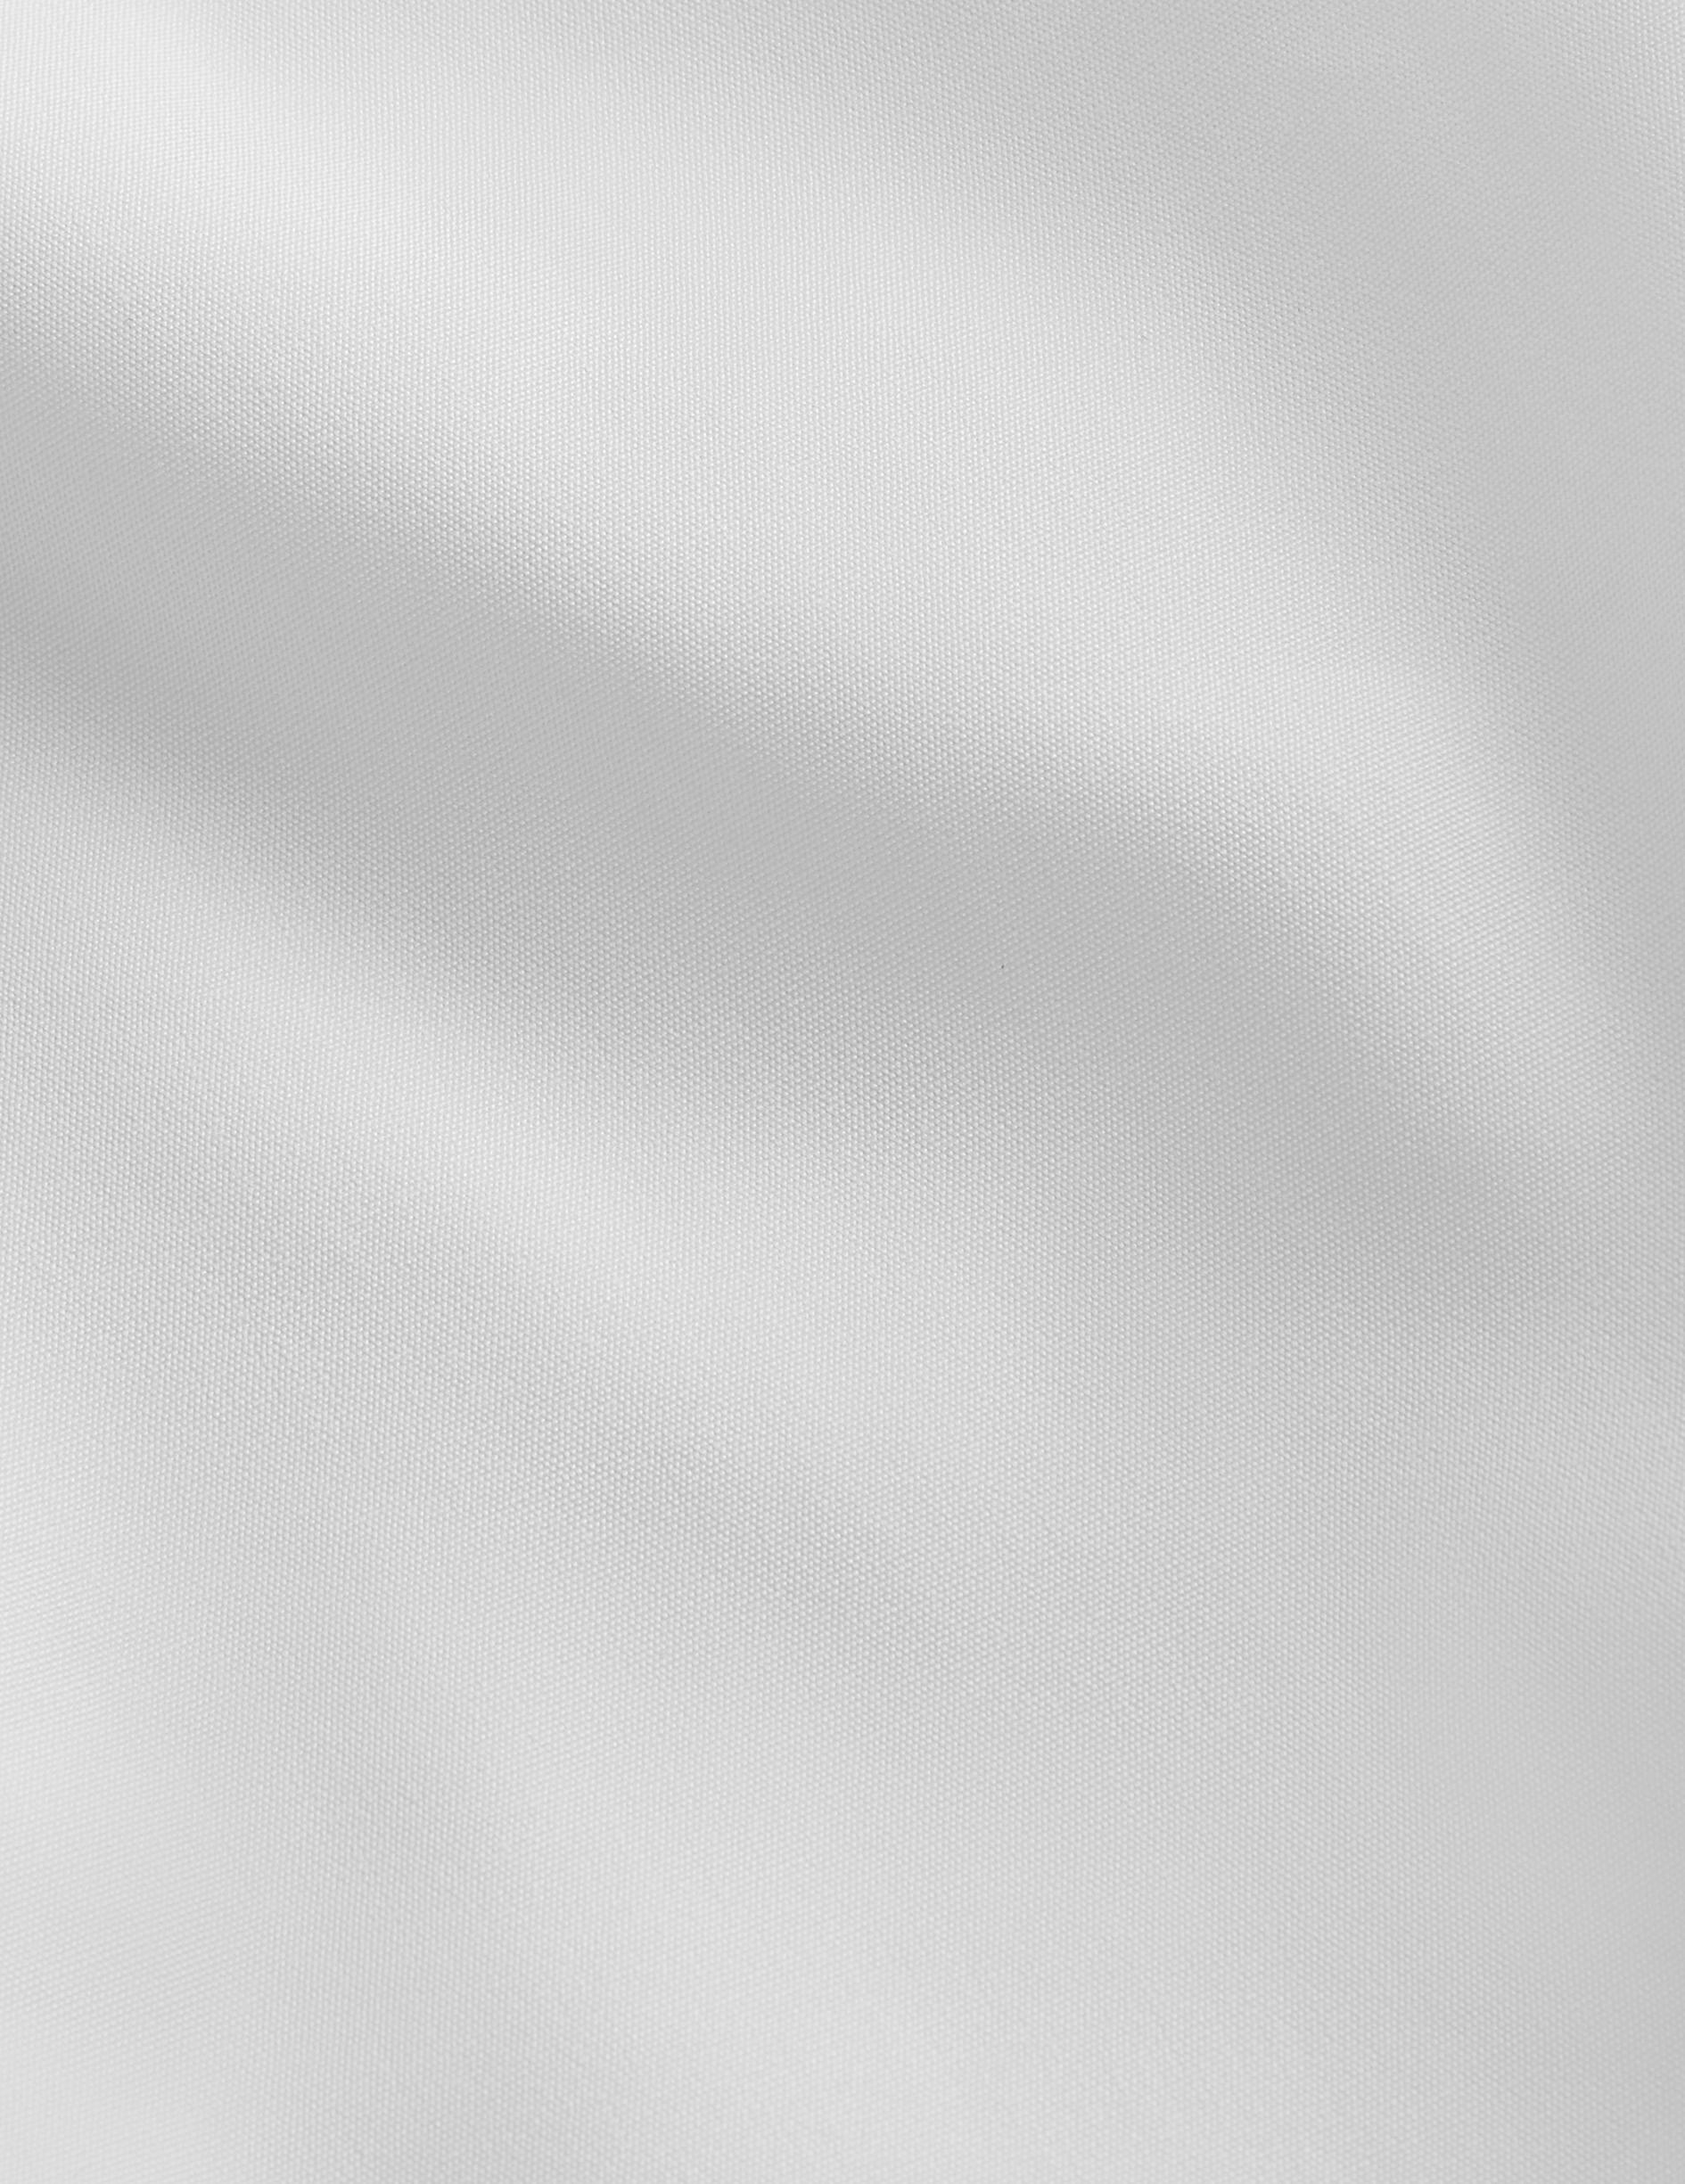 Chemise Semi-ajustée Infroissable blanche - Popeline - Col Italien